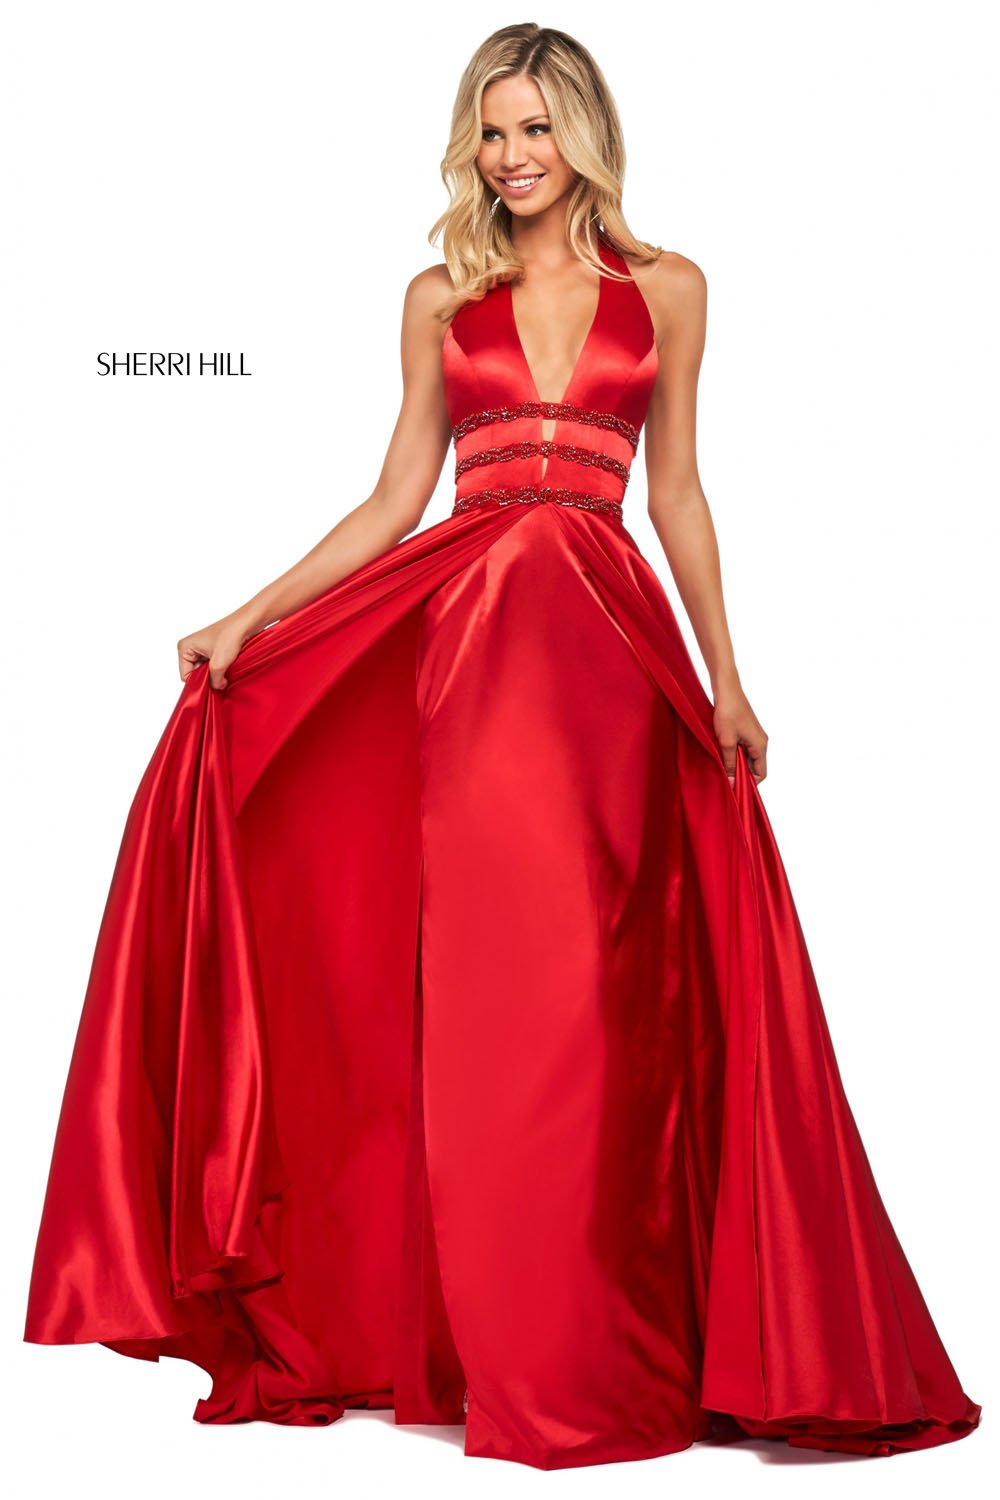 Sherri Hill 53833 dress images in these colors: Aqua, Emerald, Royal, Red, Jade, Rose.